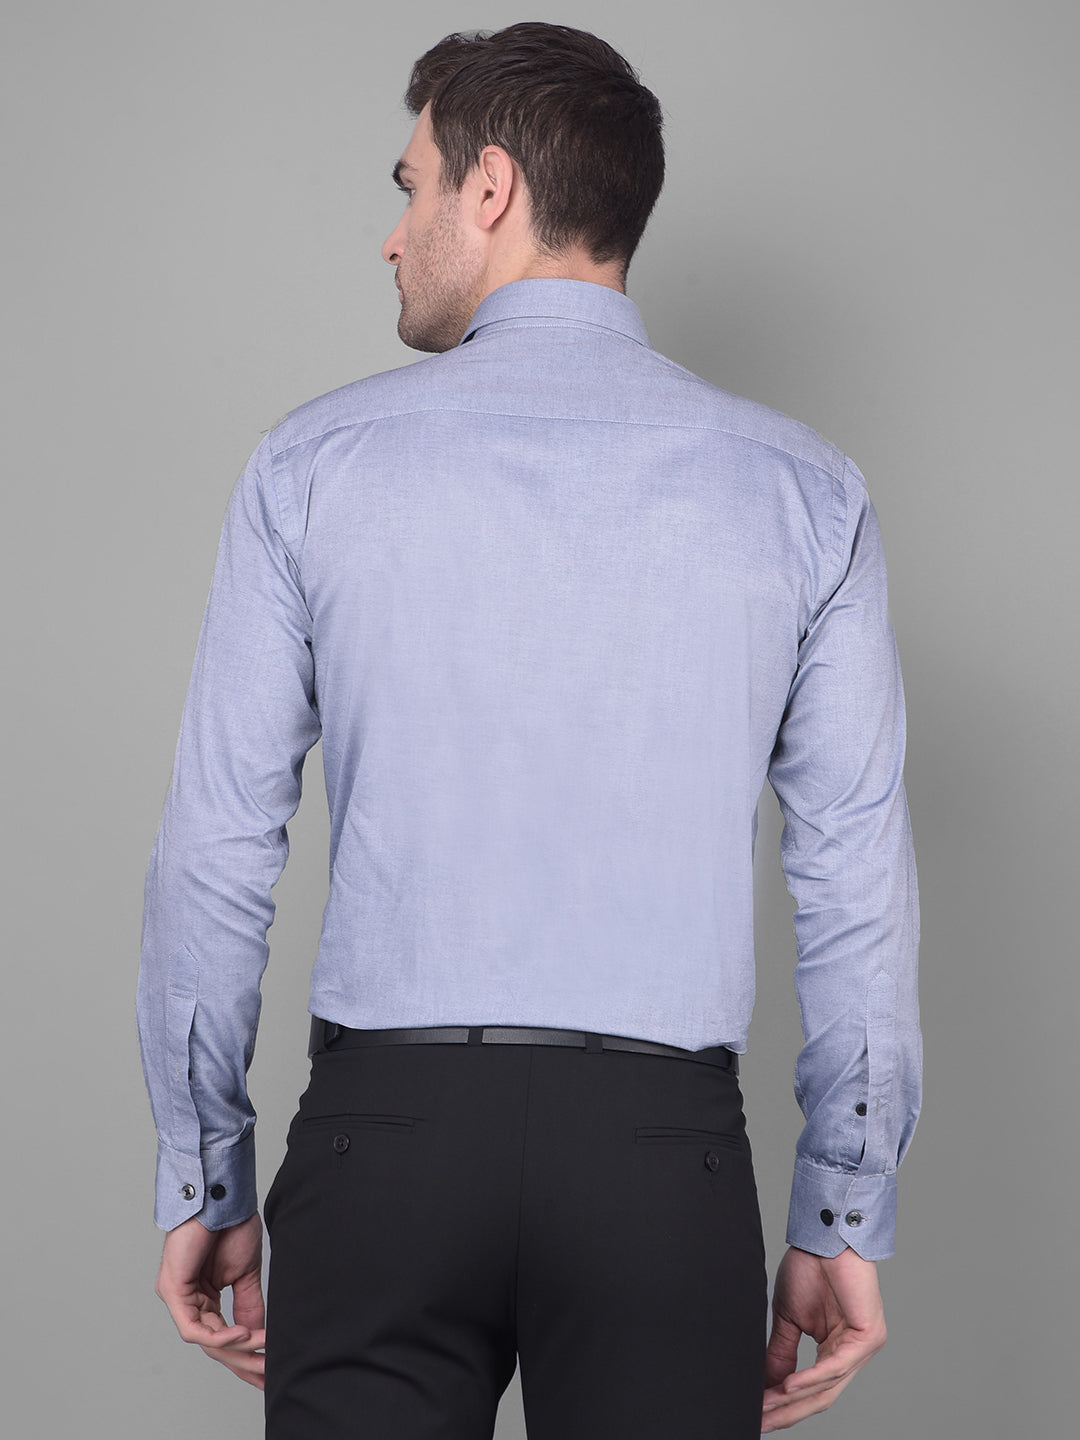 cobb solid grey smart fit formal shirt